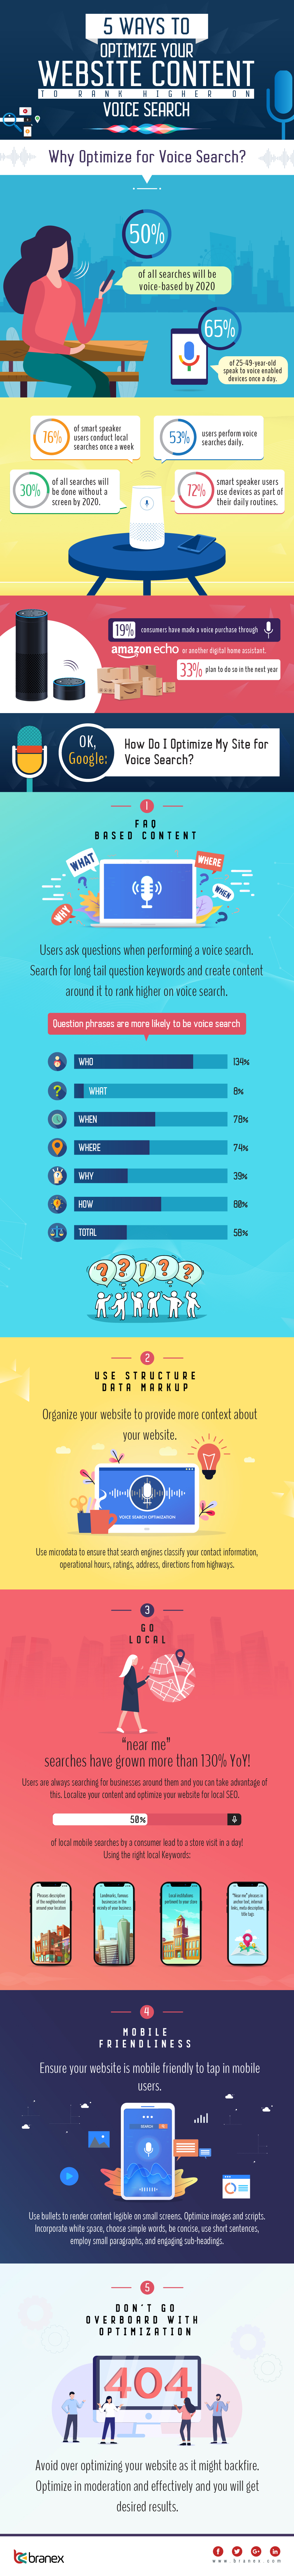 Branex Voice Search Infographic